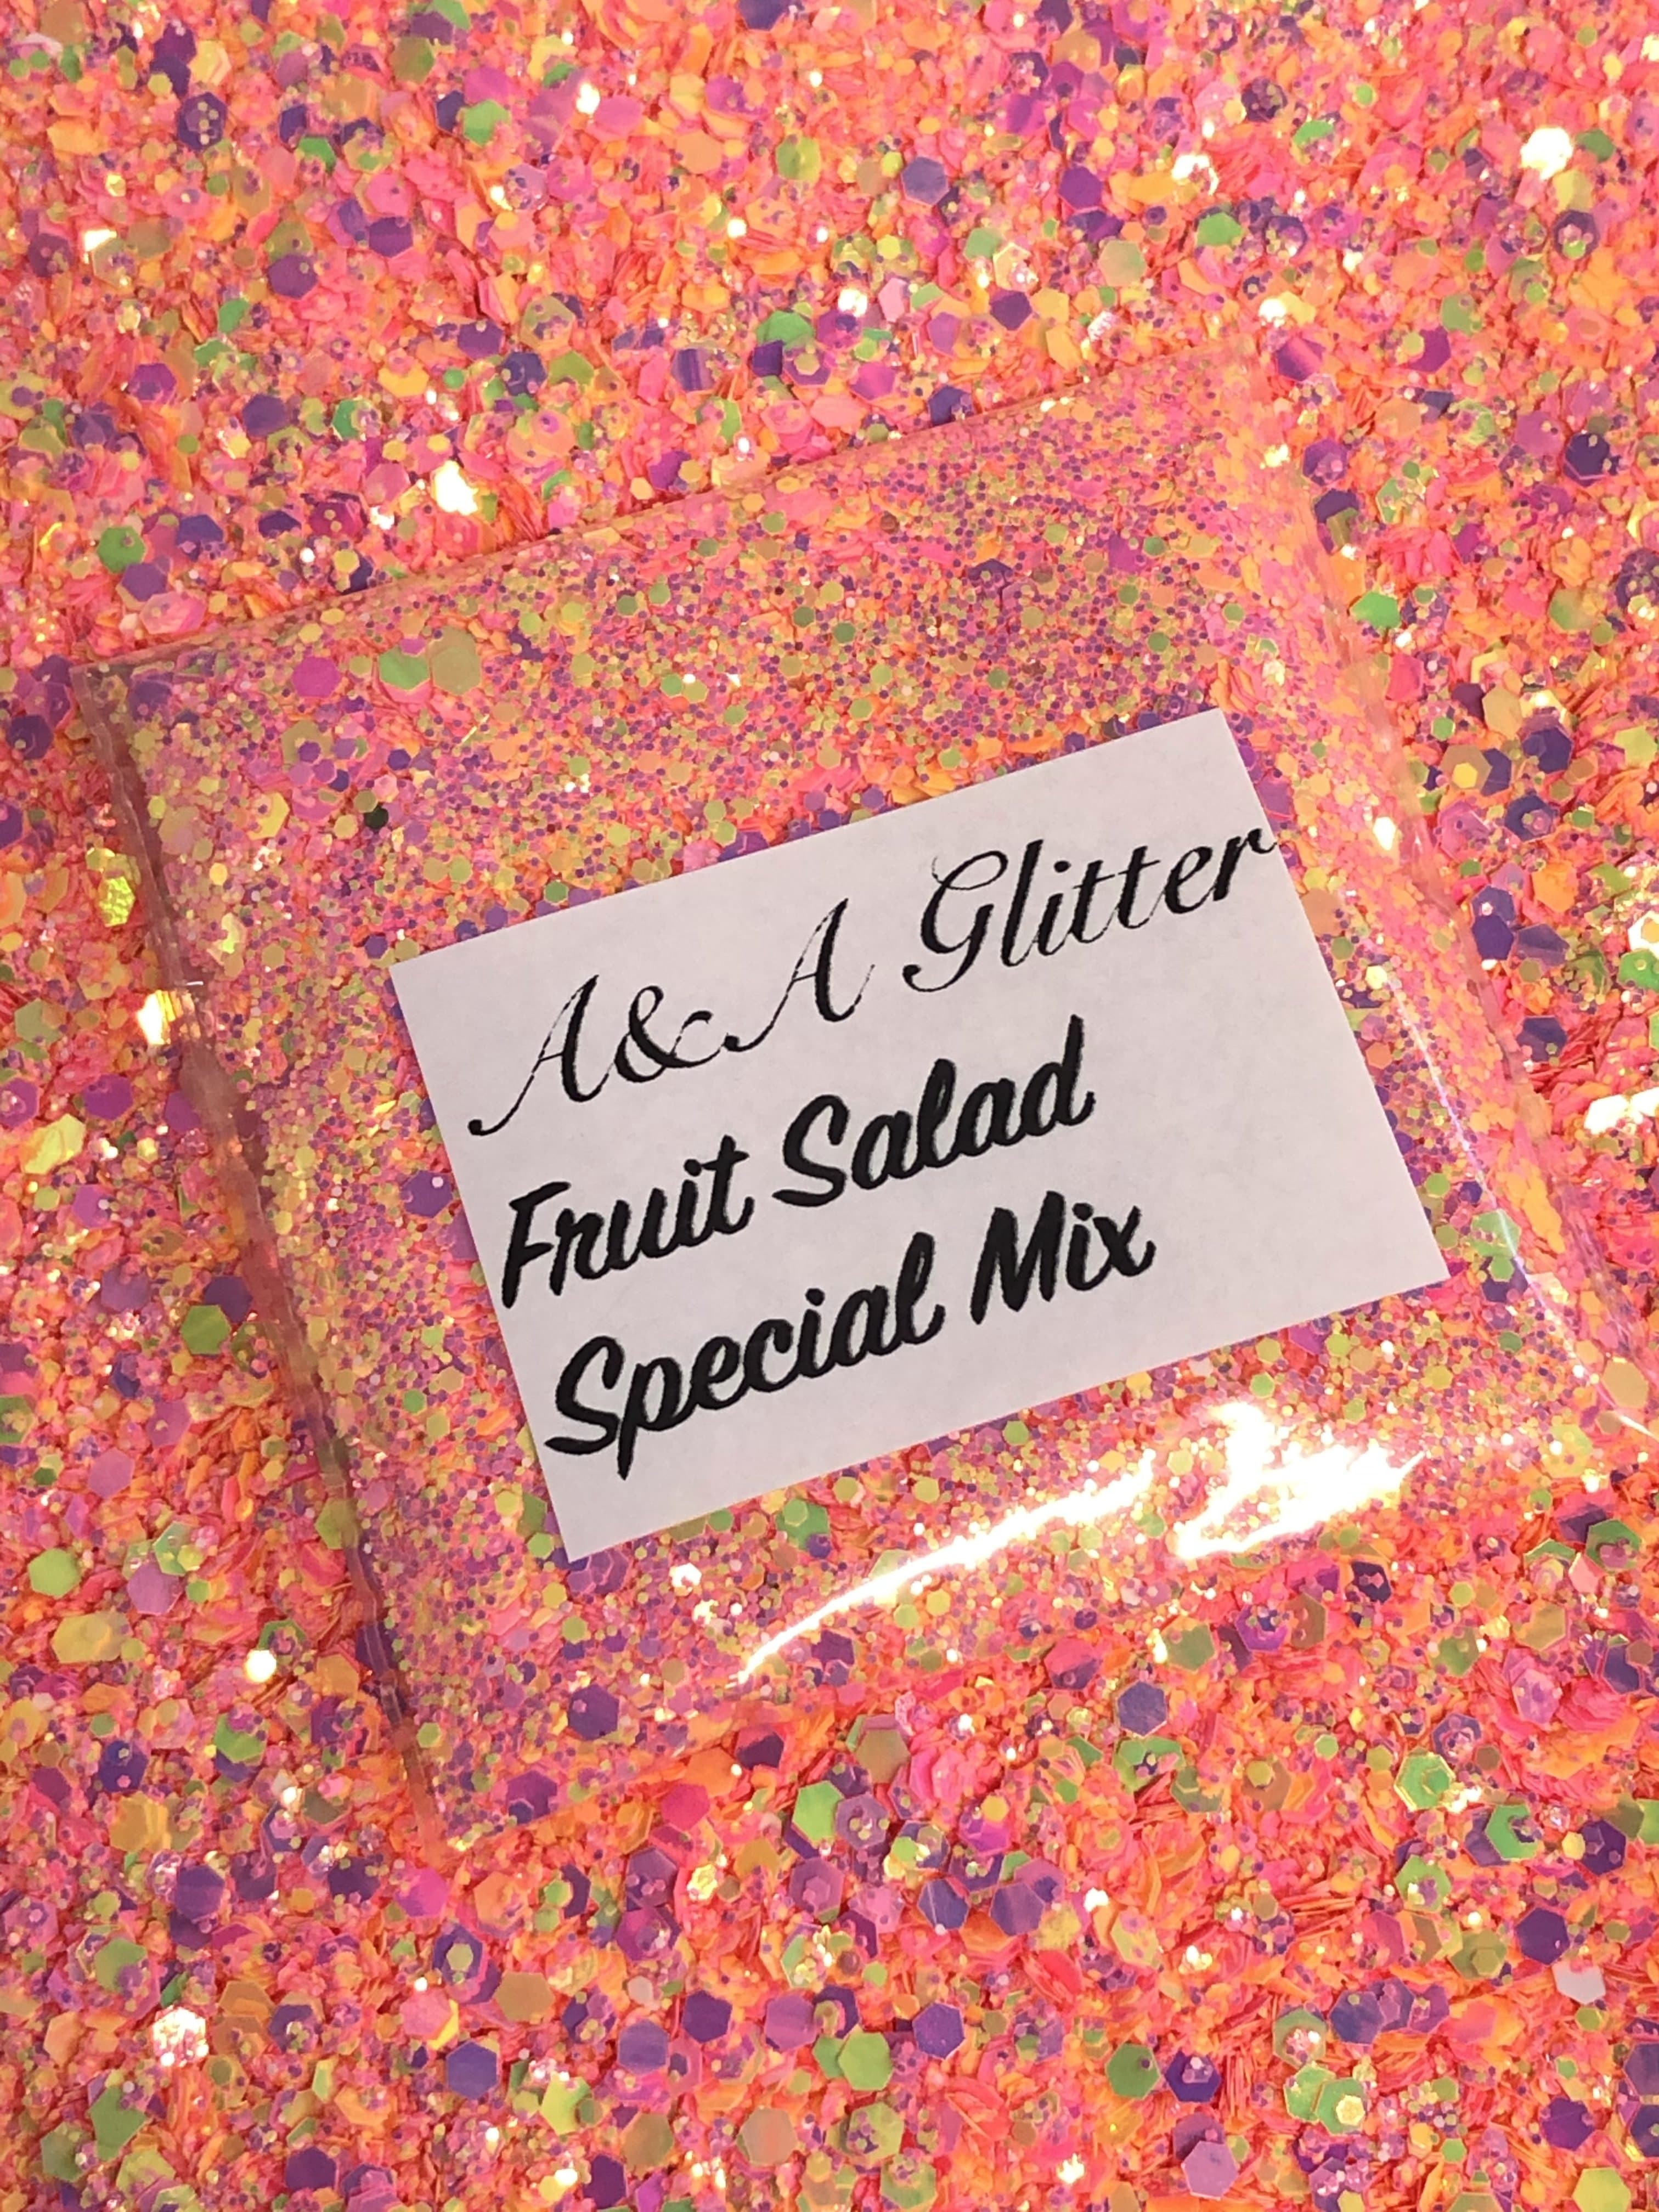 Fruit salad  - Special Mix